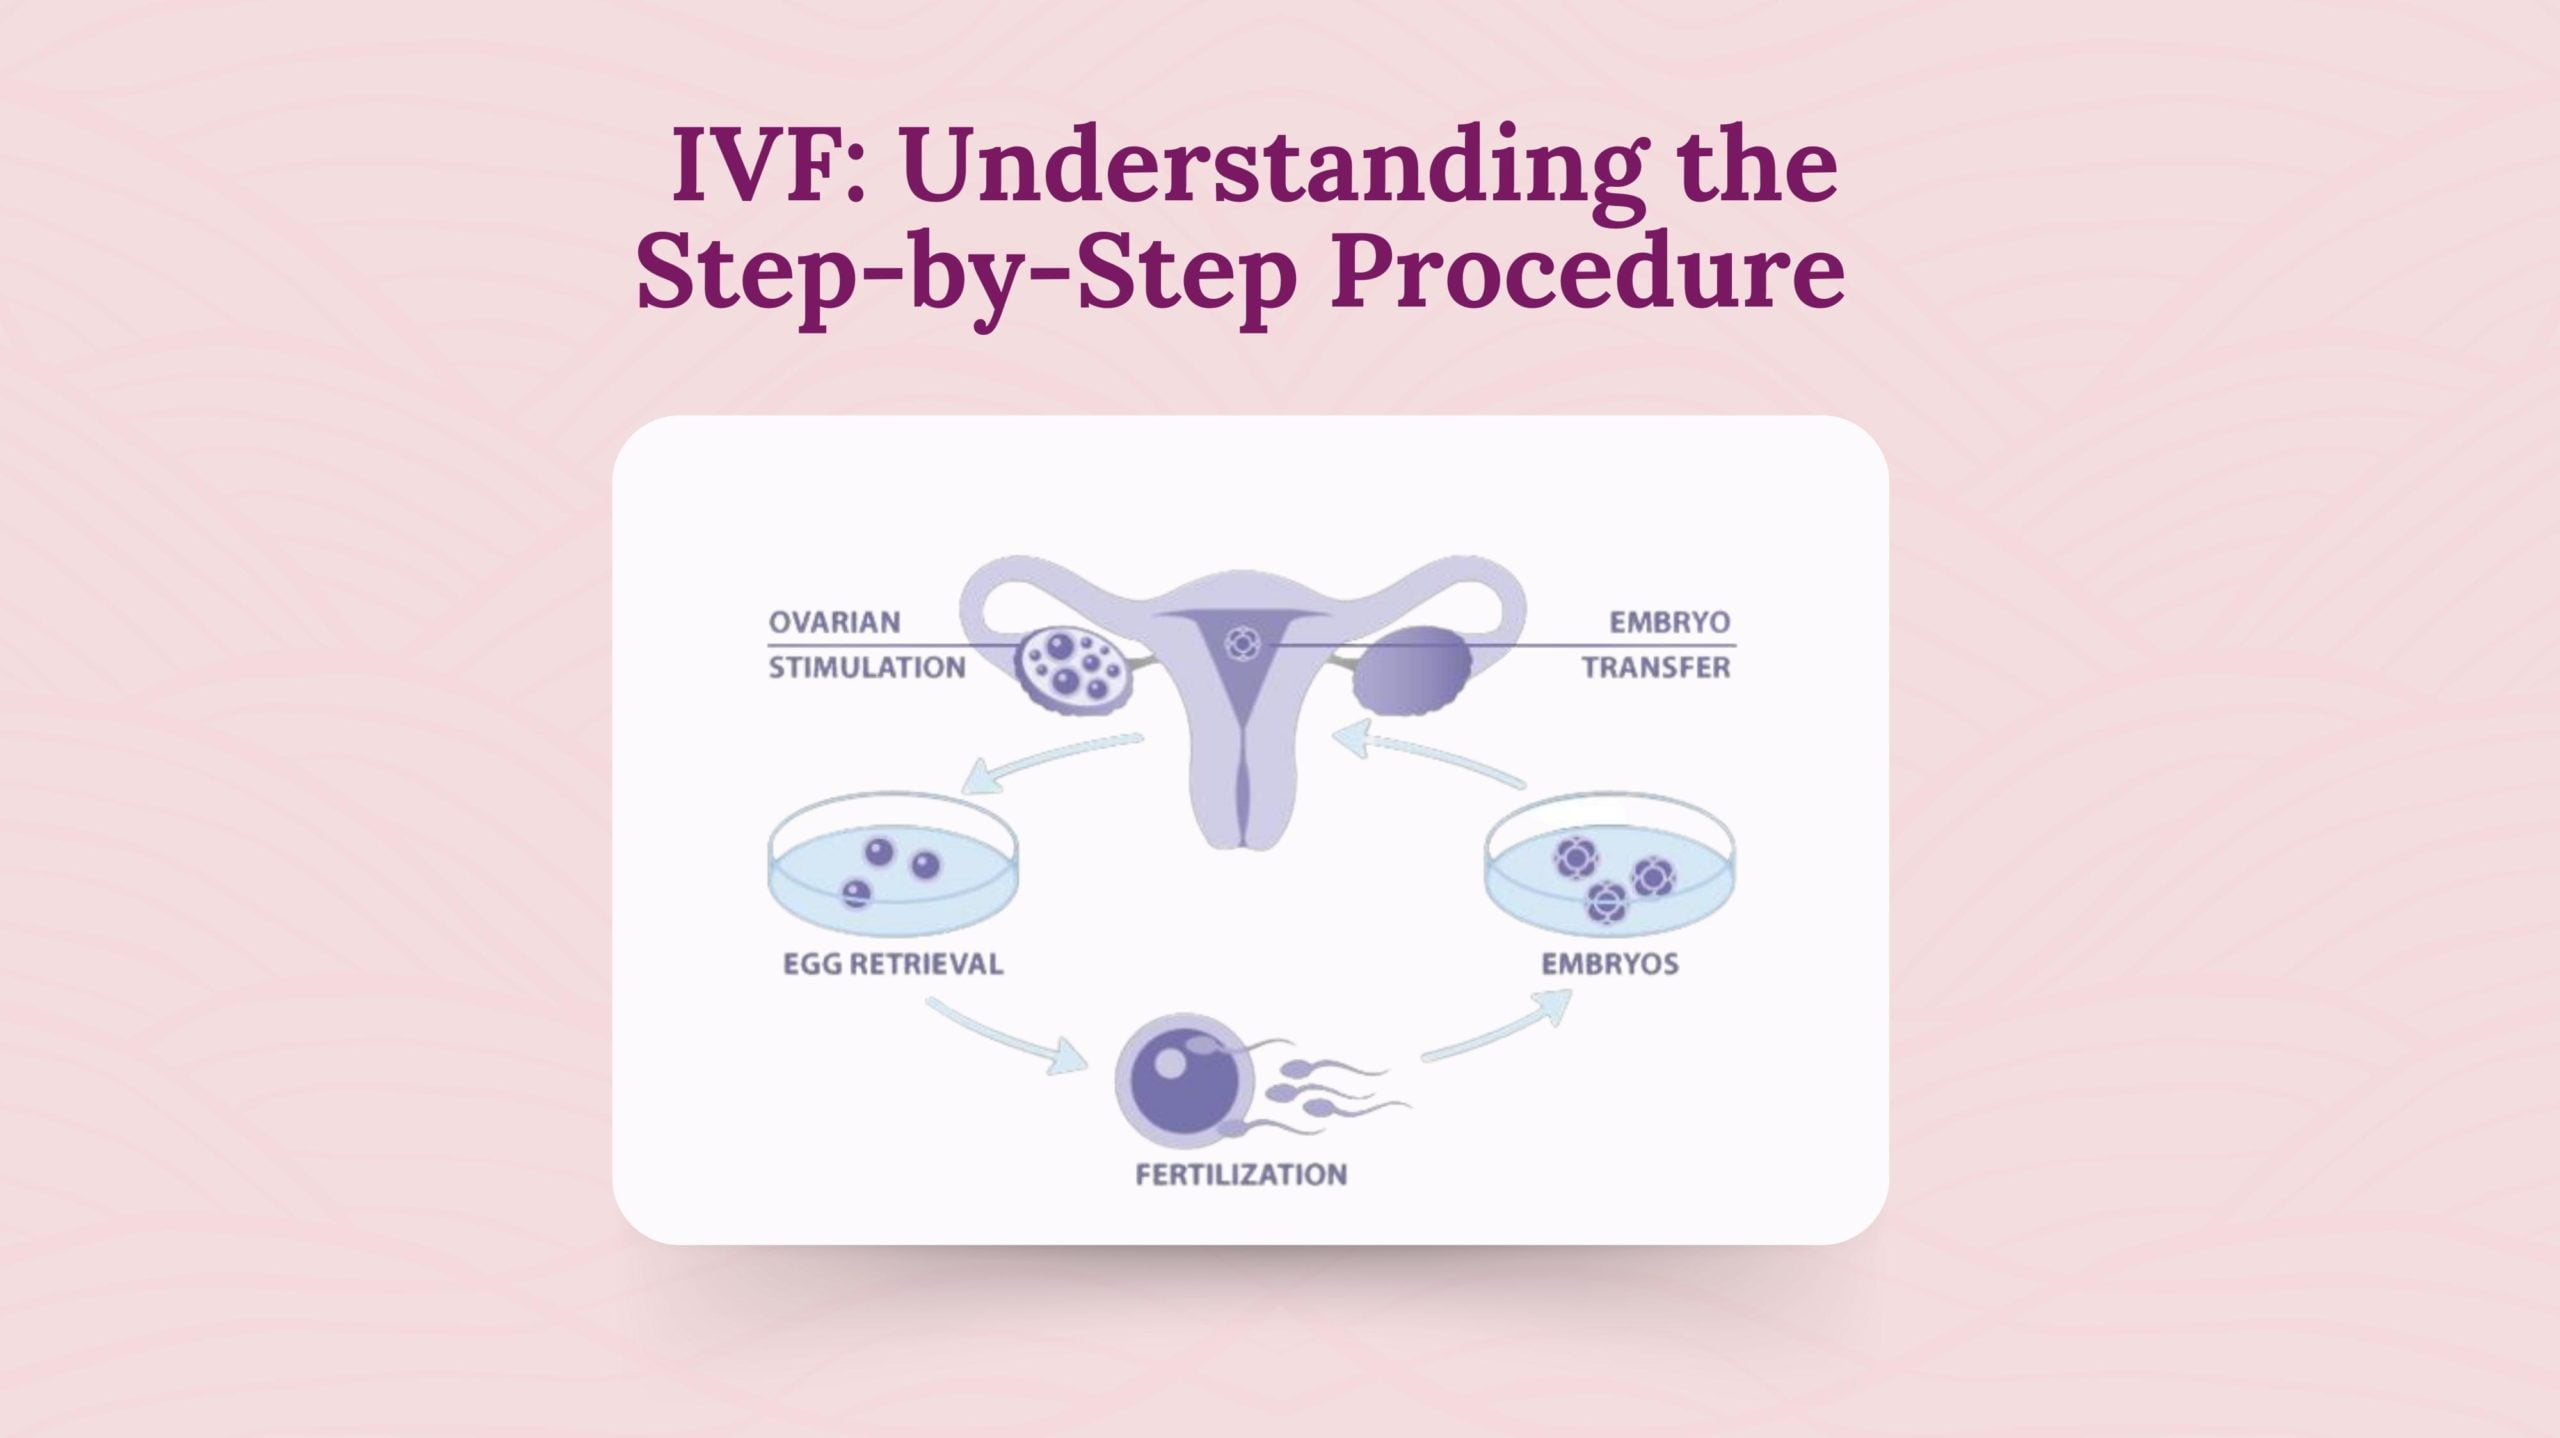 IVF: Understanding the Step-by-Step Procedure